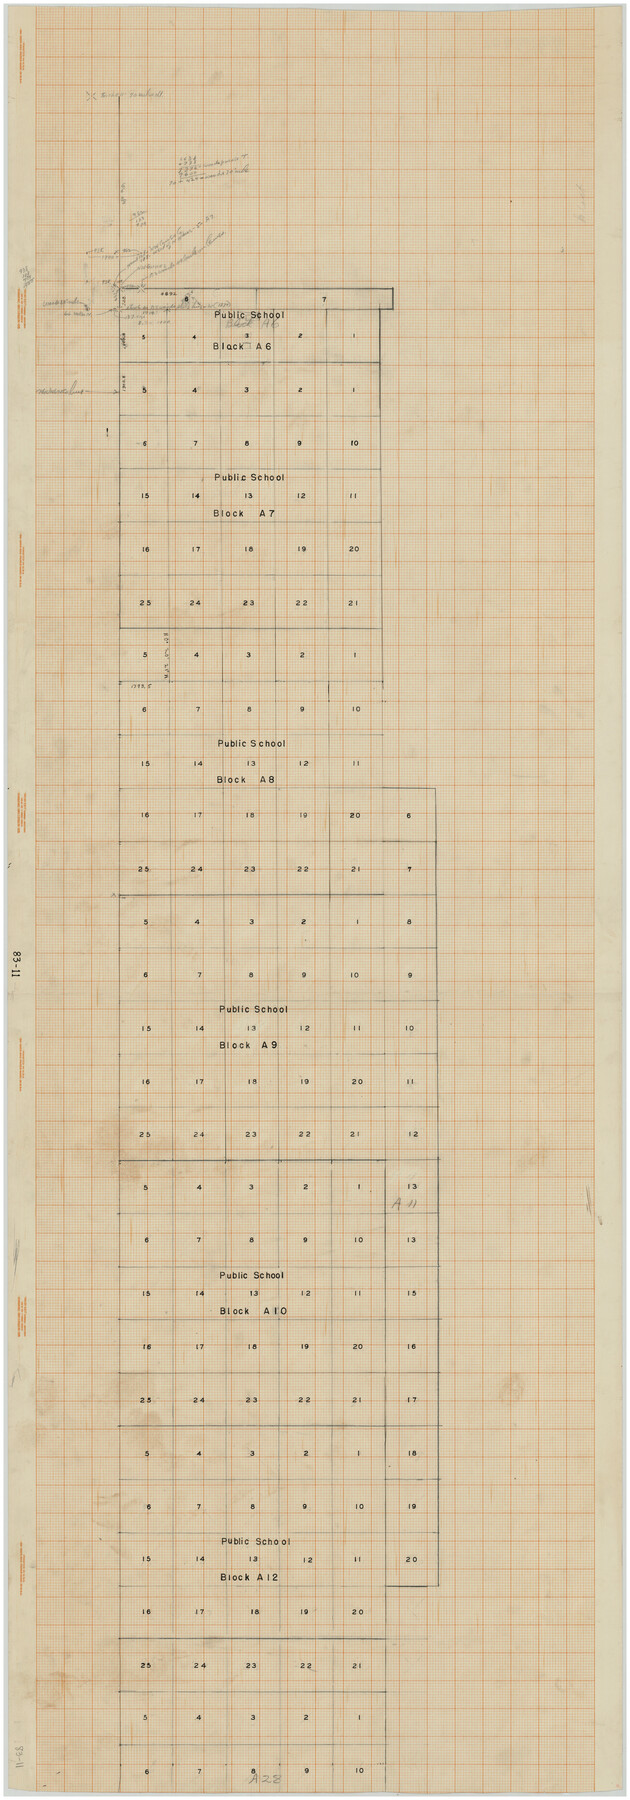 89780, [PSL Blocks A6-A12], Twichell Survey Records